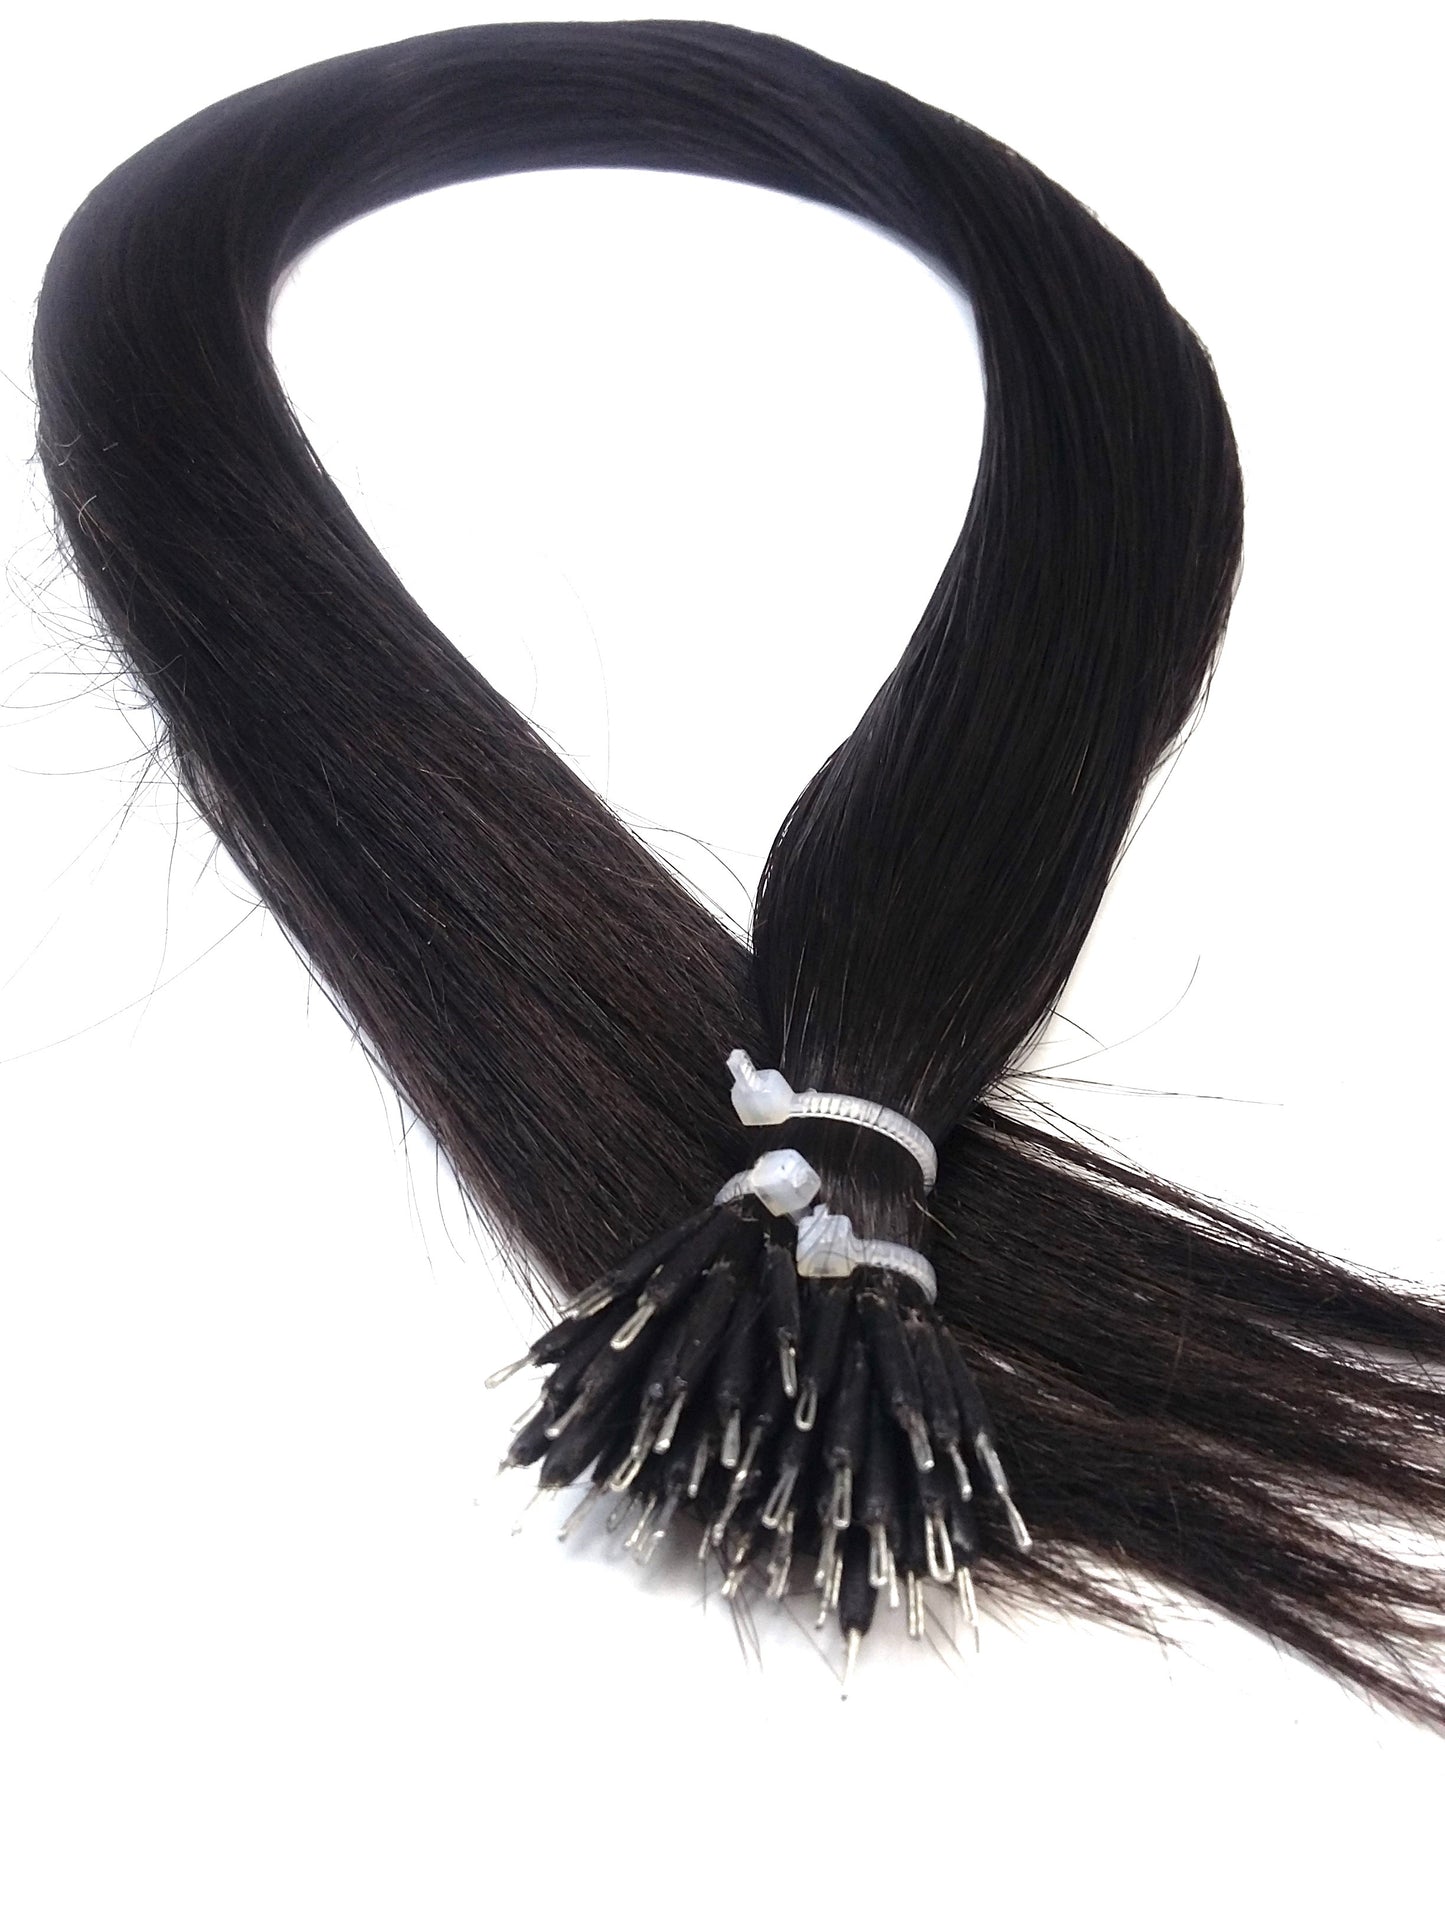 Brazilian Virgin Remy Human Hair, Nano Ring Extensions, Straight, 20'', Virgin Uncoloured. Quick Shipping!